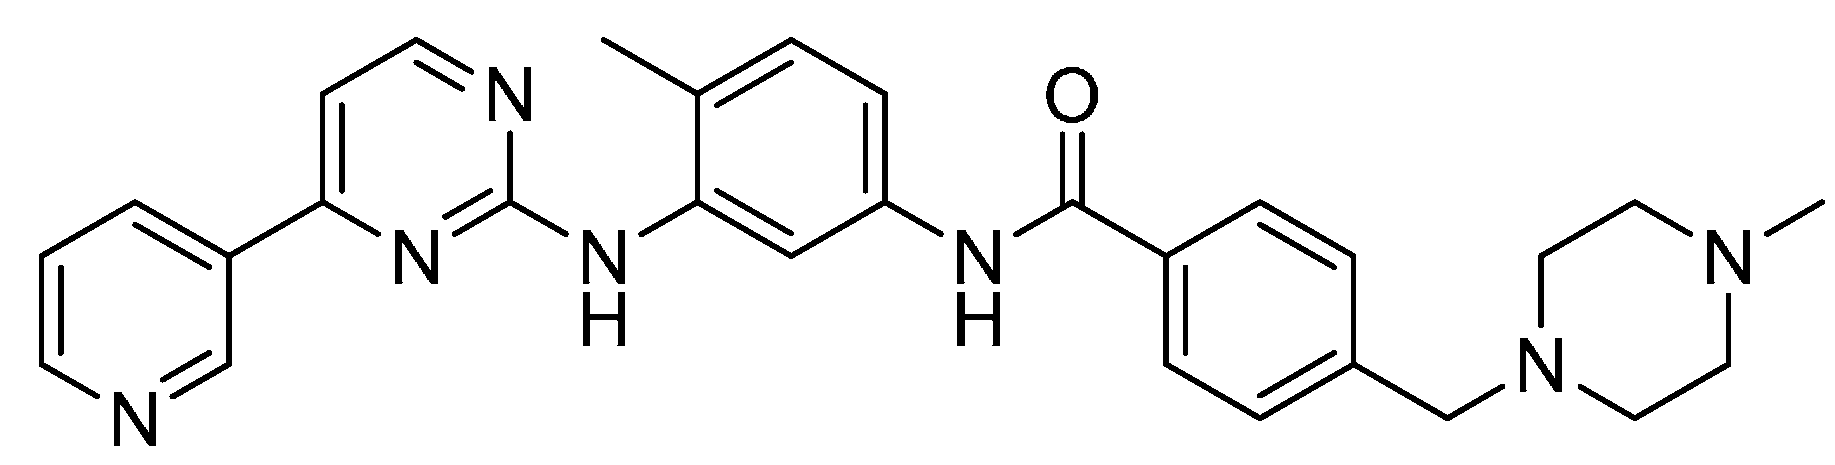 Molecules 19 14366 g001